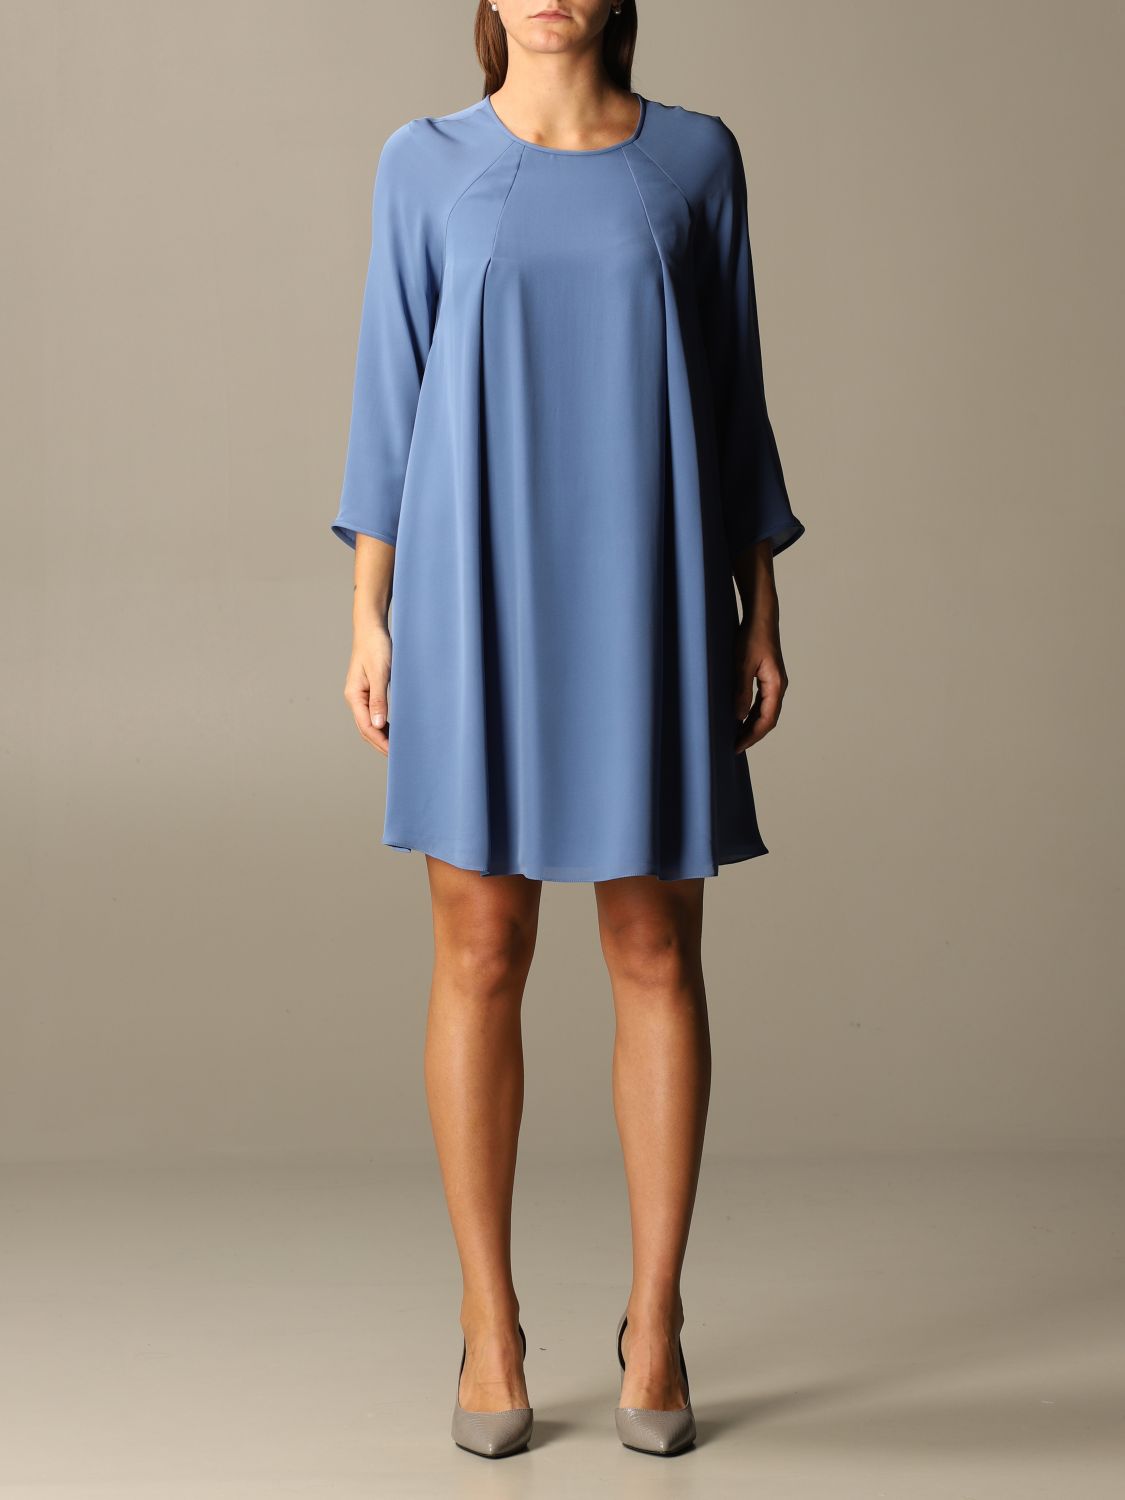 Emporio Armani Blue Dress Clearance, SAVE 56% 